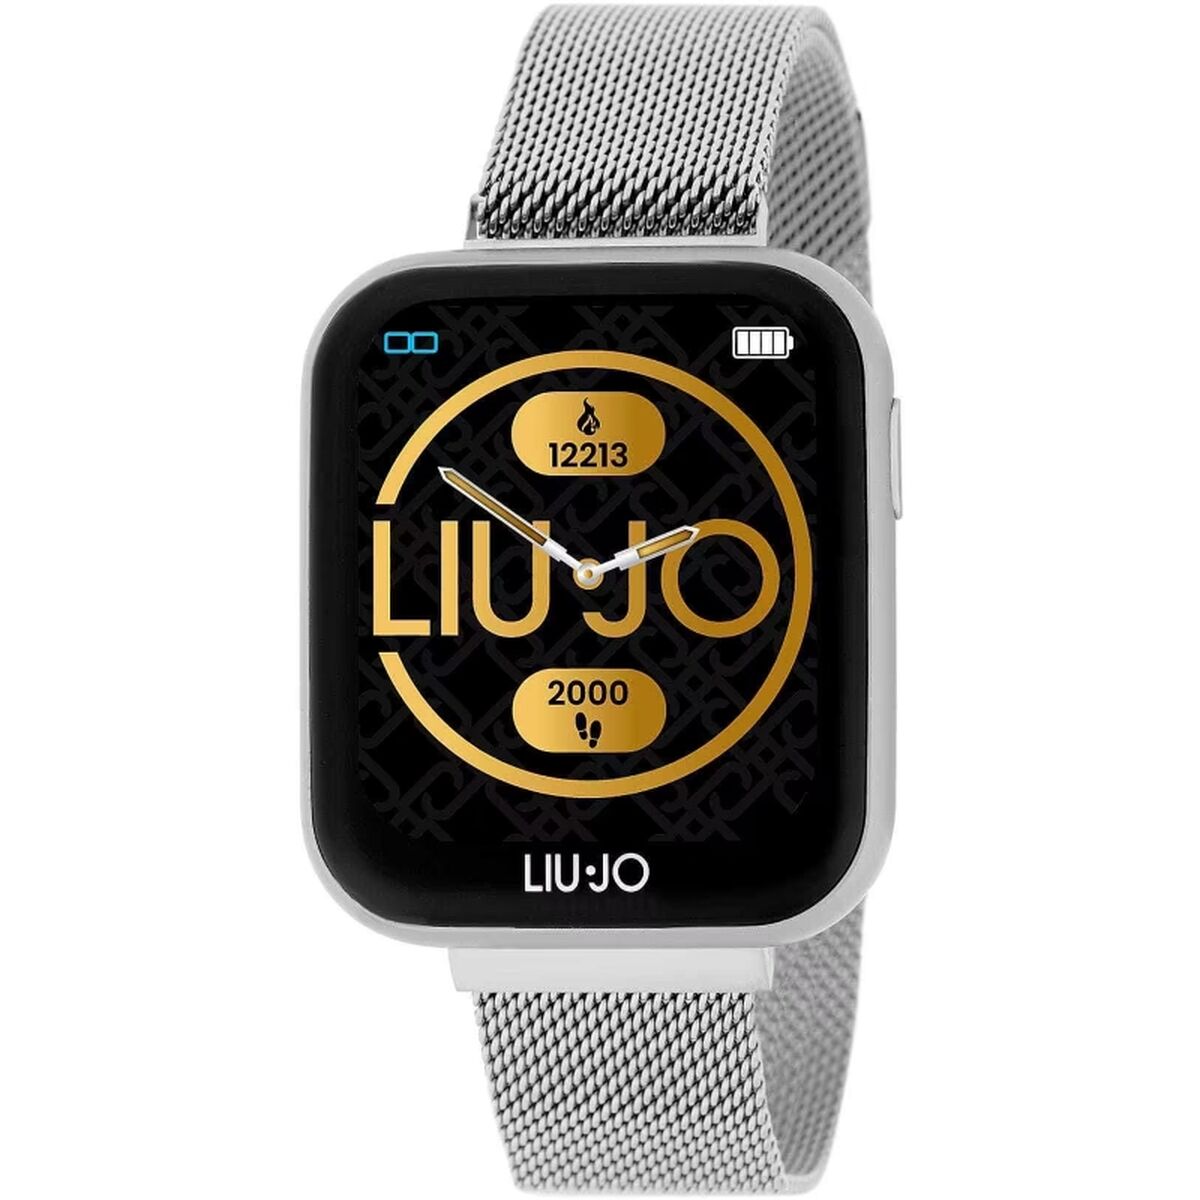 Kaufe Smartwatch LIU JO SWLJ051 bei AWK Flagship um € 180.00